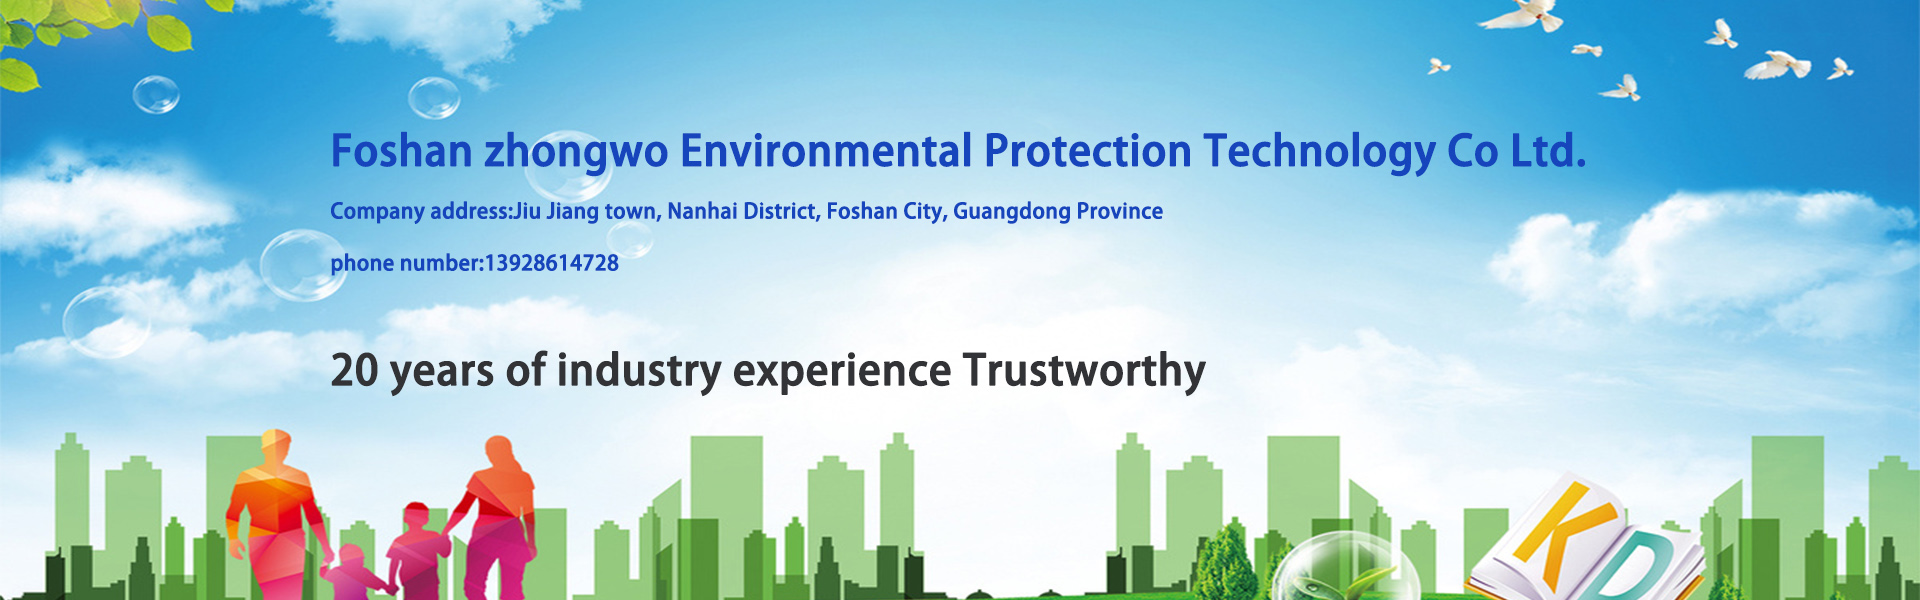 معدات معالجة المياه ، معدات تنقية المياه ، معدات حماية البيئة,Foshan zhongwo Environmental Protection Technology Co Ltd.